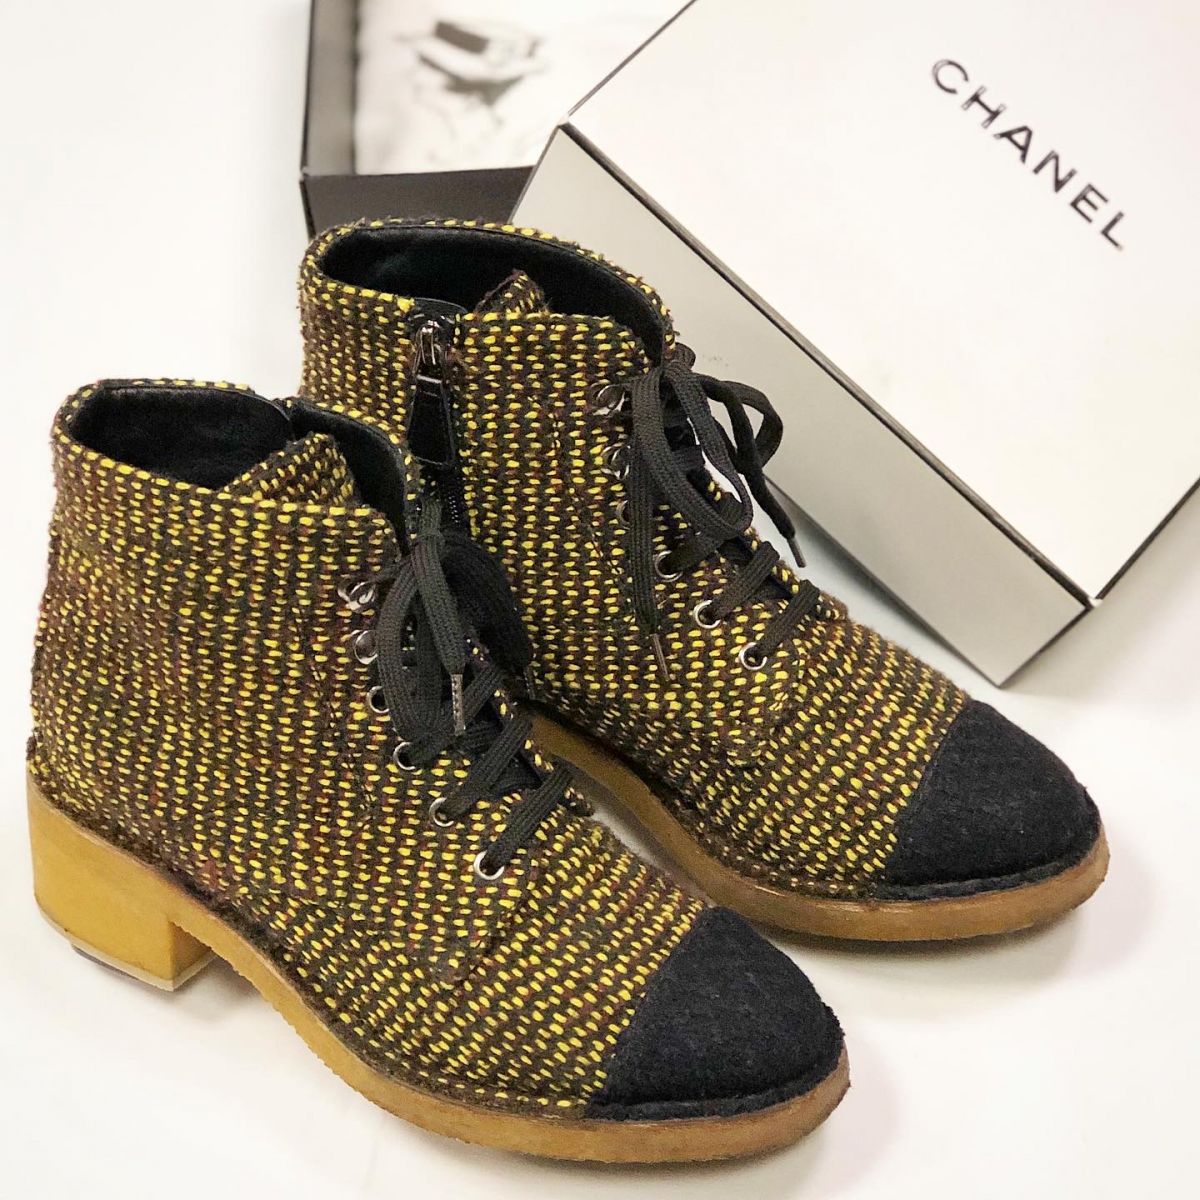 Ботинки / твид / Chanel  размер 40 цена 23 077 руб